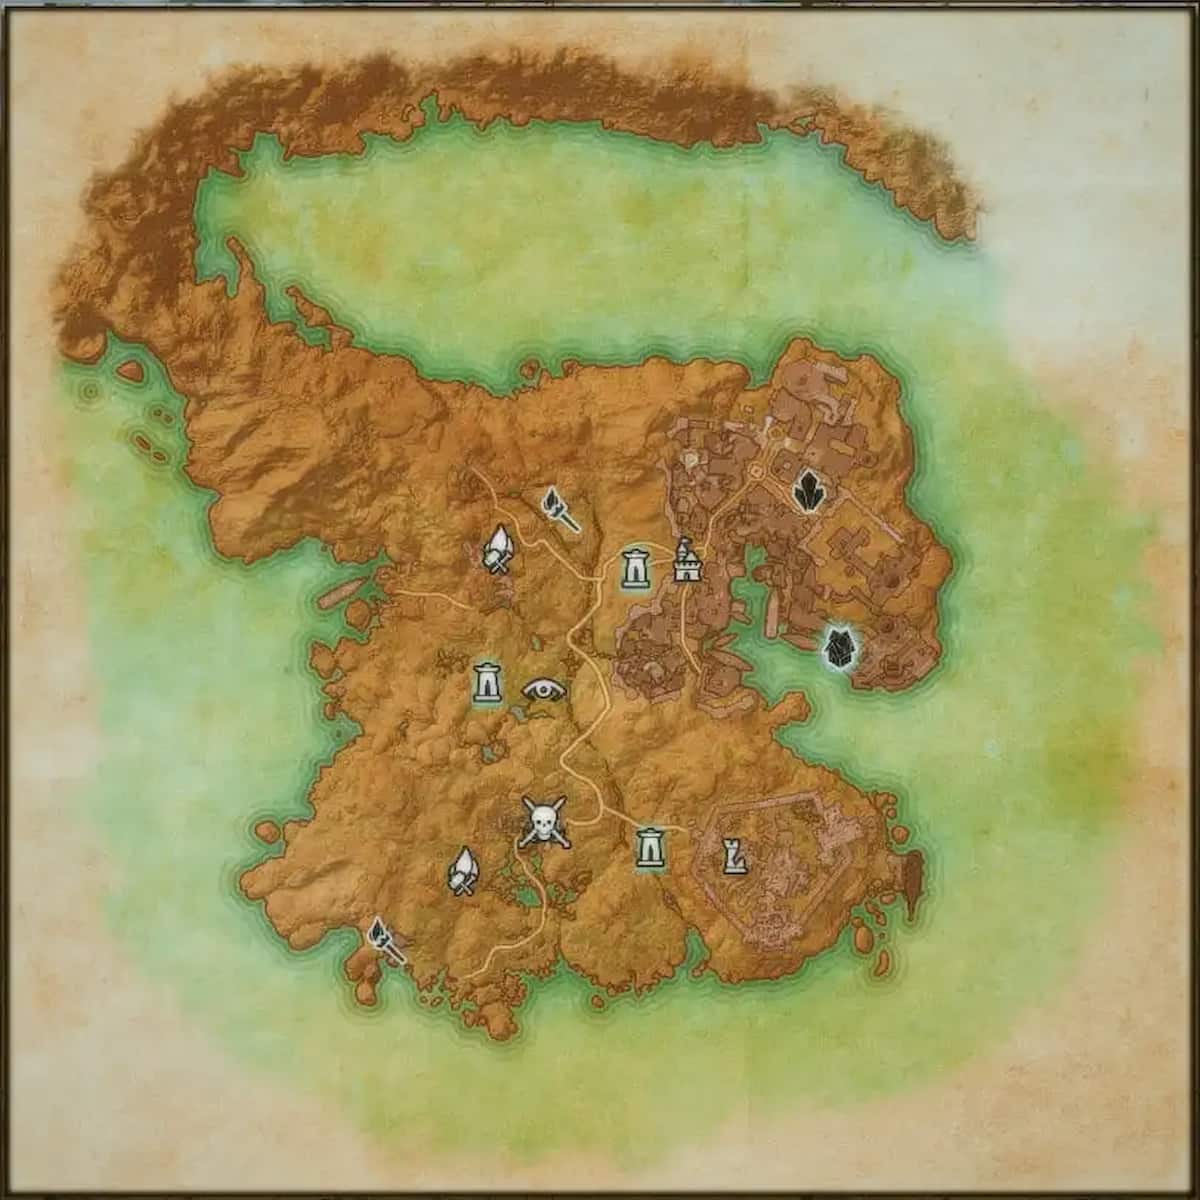 The Hew's Bane map in The Elder Scrolls Online.